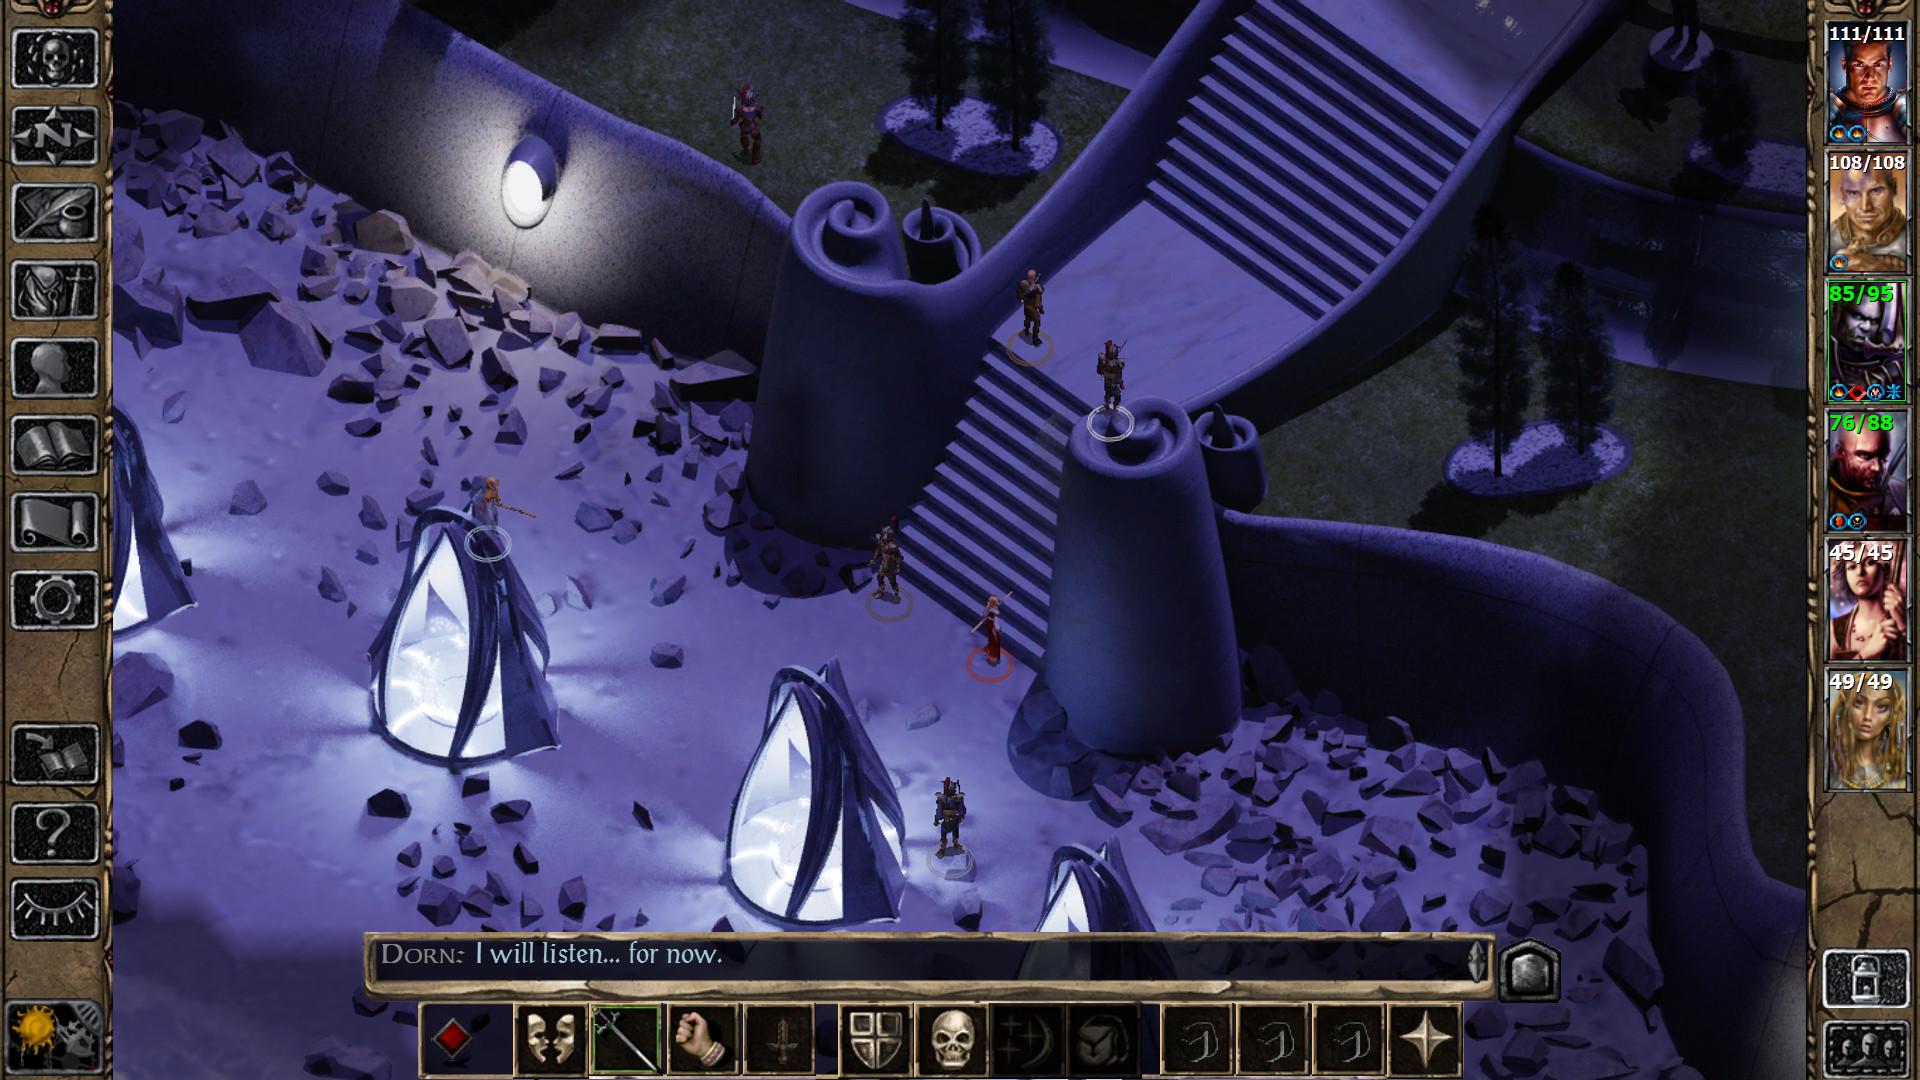 Screenshot №5 from game Baldur's Gate II: Enhanced Edition